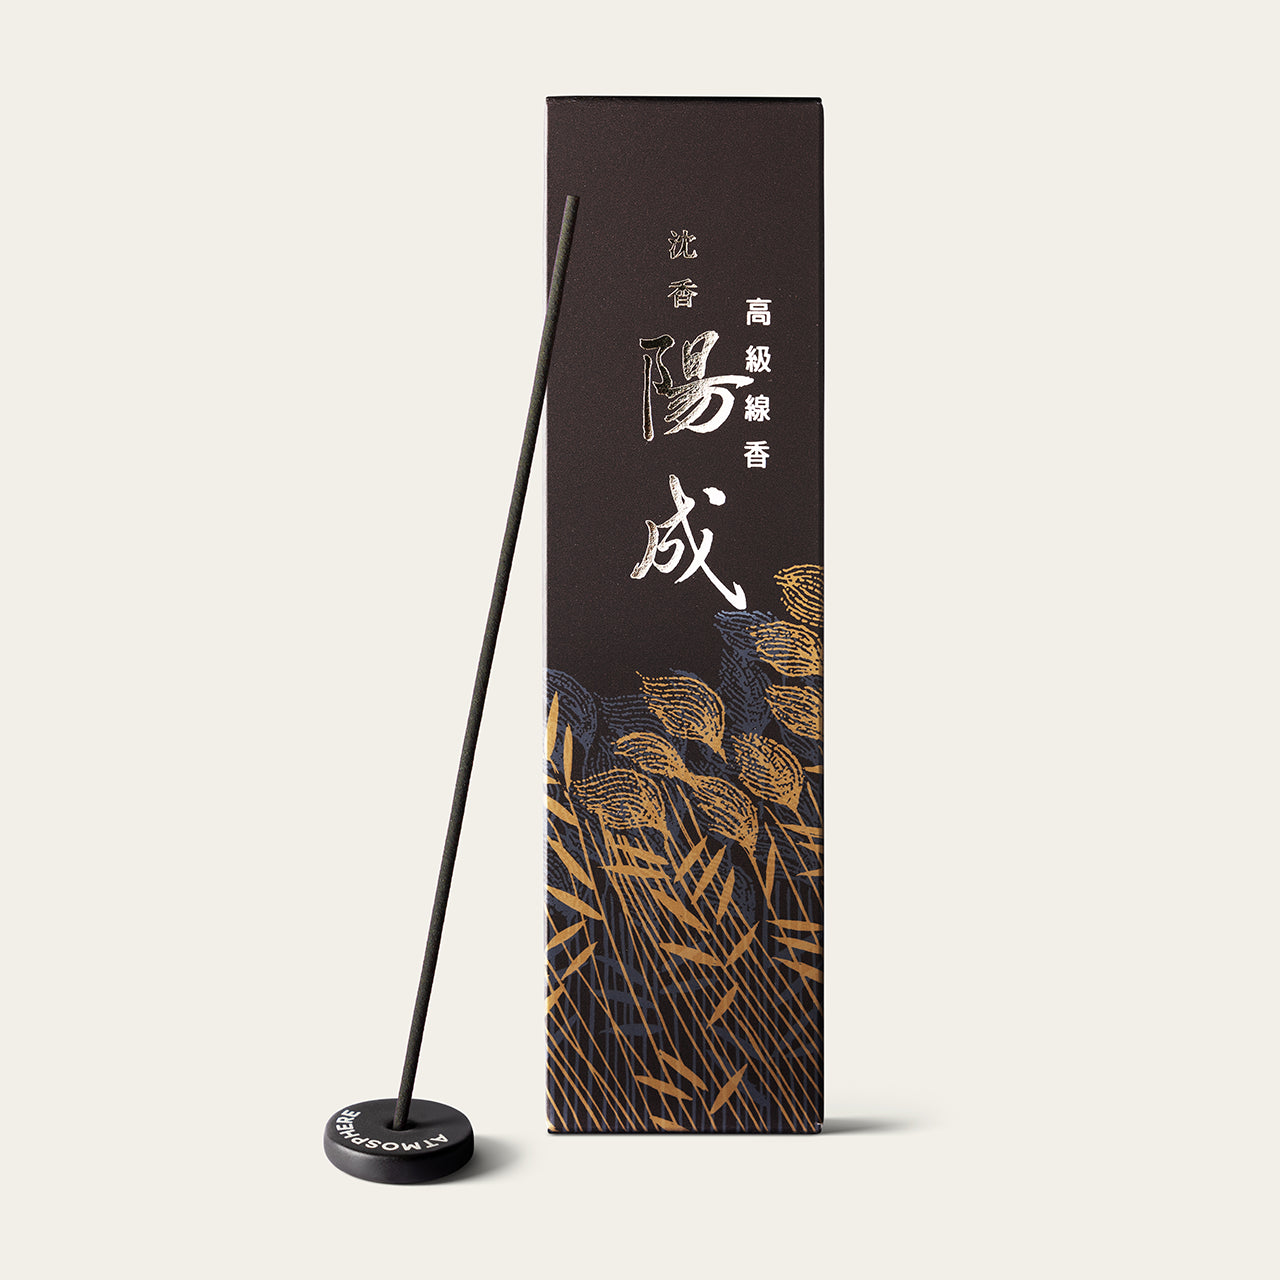 Gyokushodo Jinko Yozei Agarwood Radiance Japanese incense sticks (25 sticks) with Atmosphere ceramic incense holder